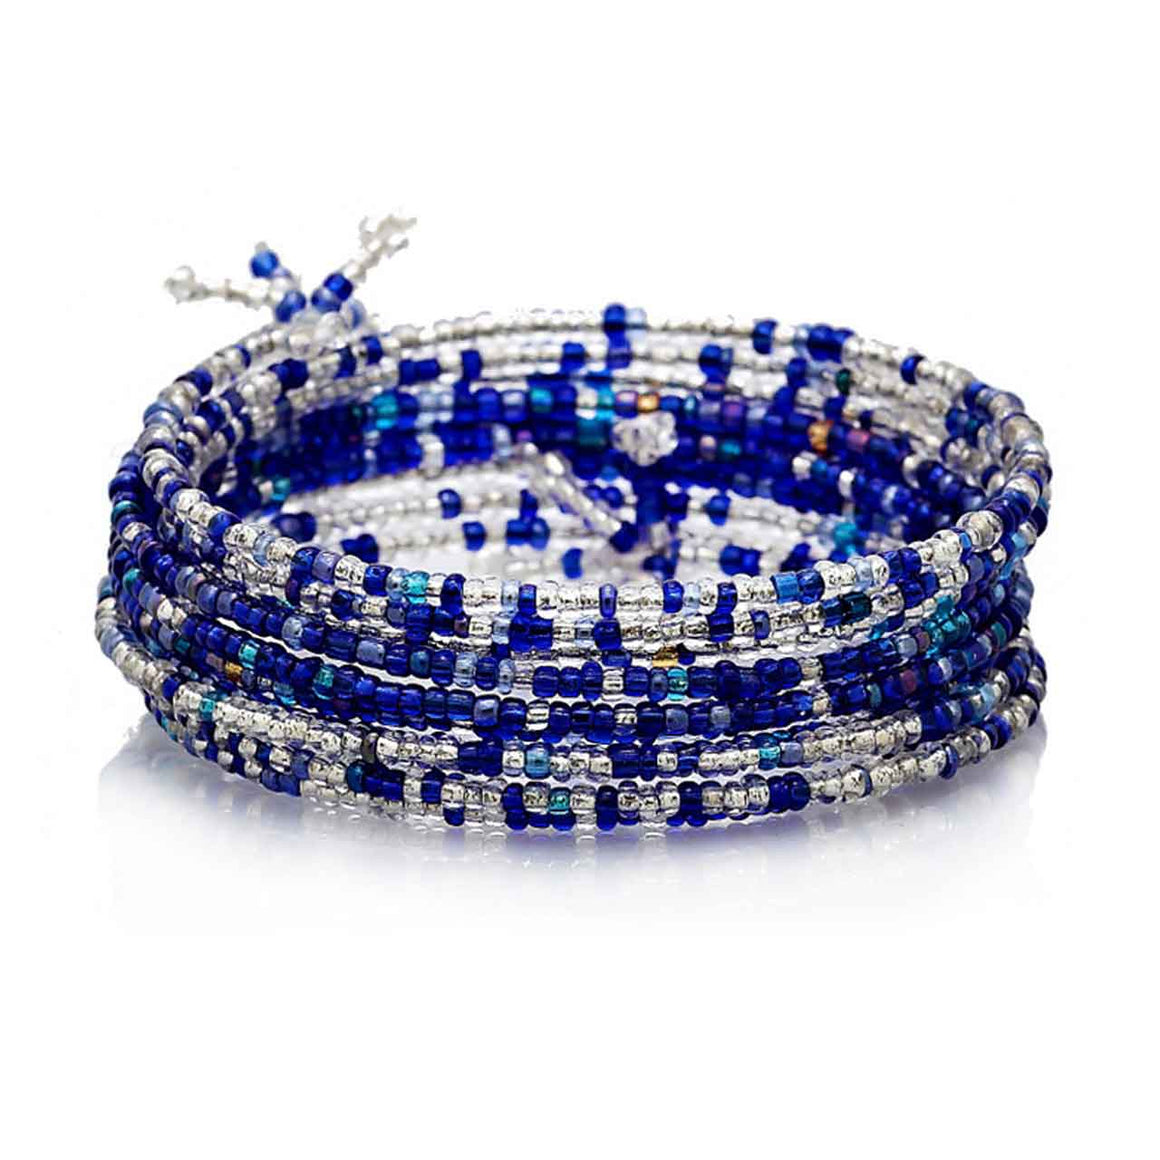 10 Row Glass Bead Bracelet - Lapis Coloured